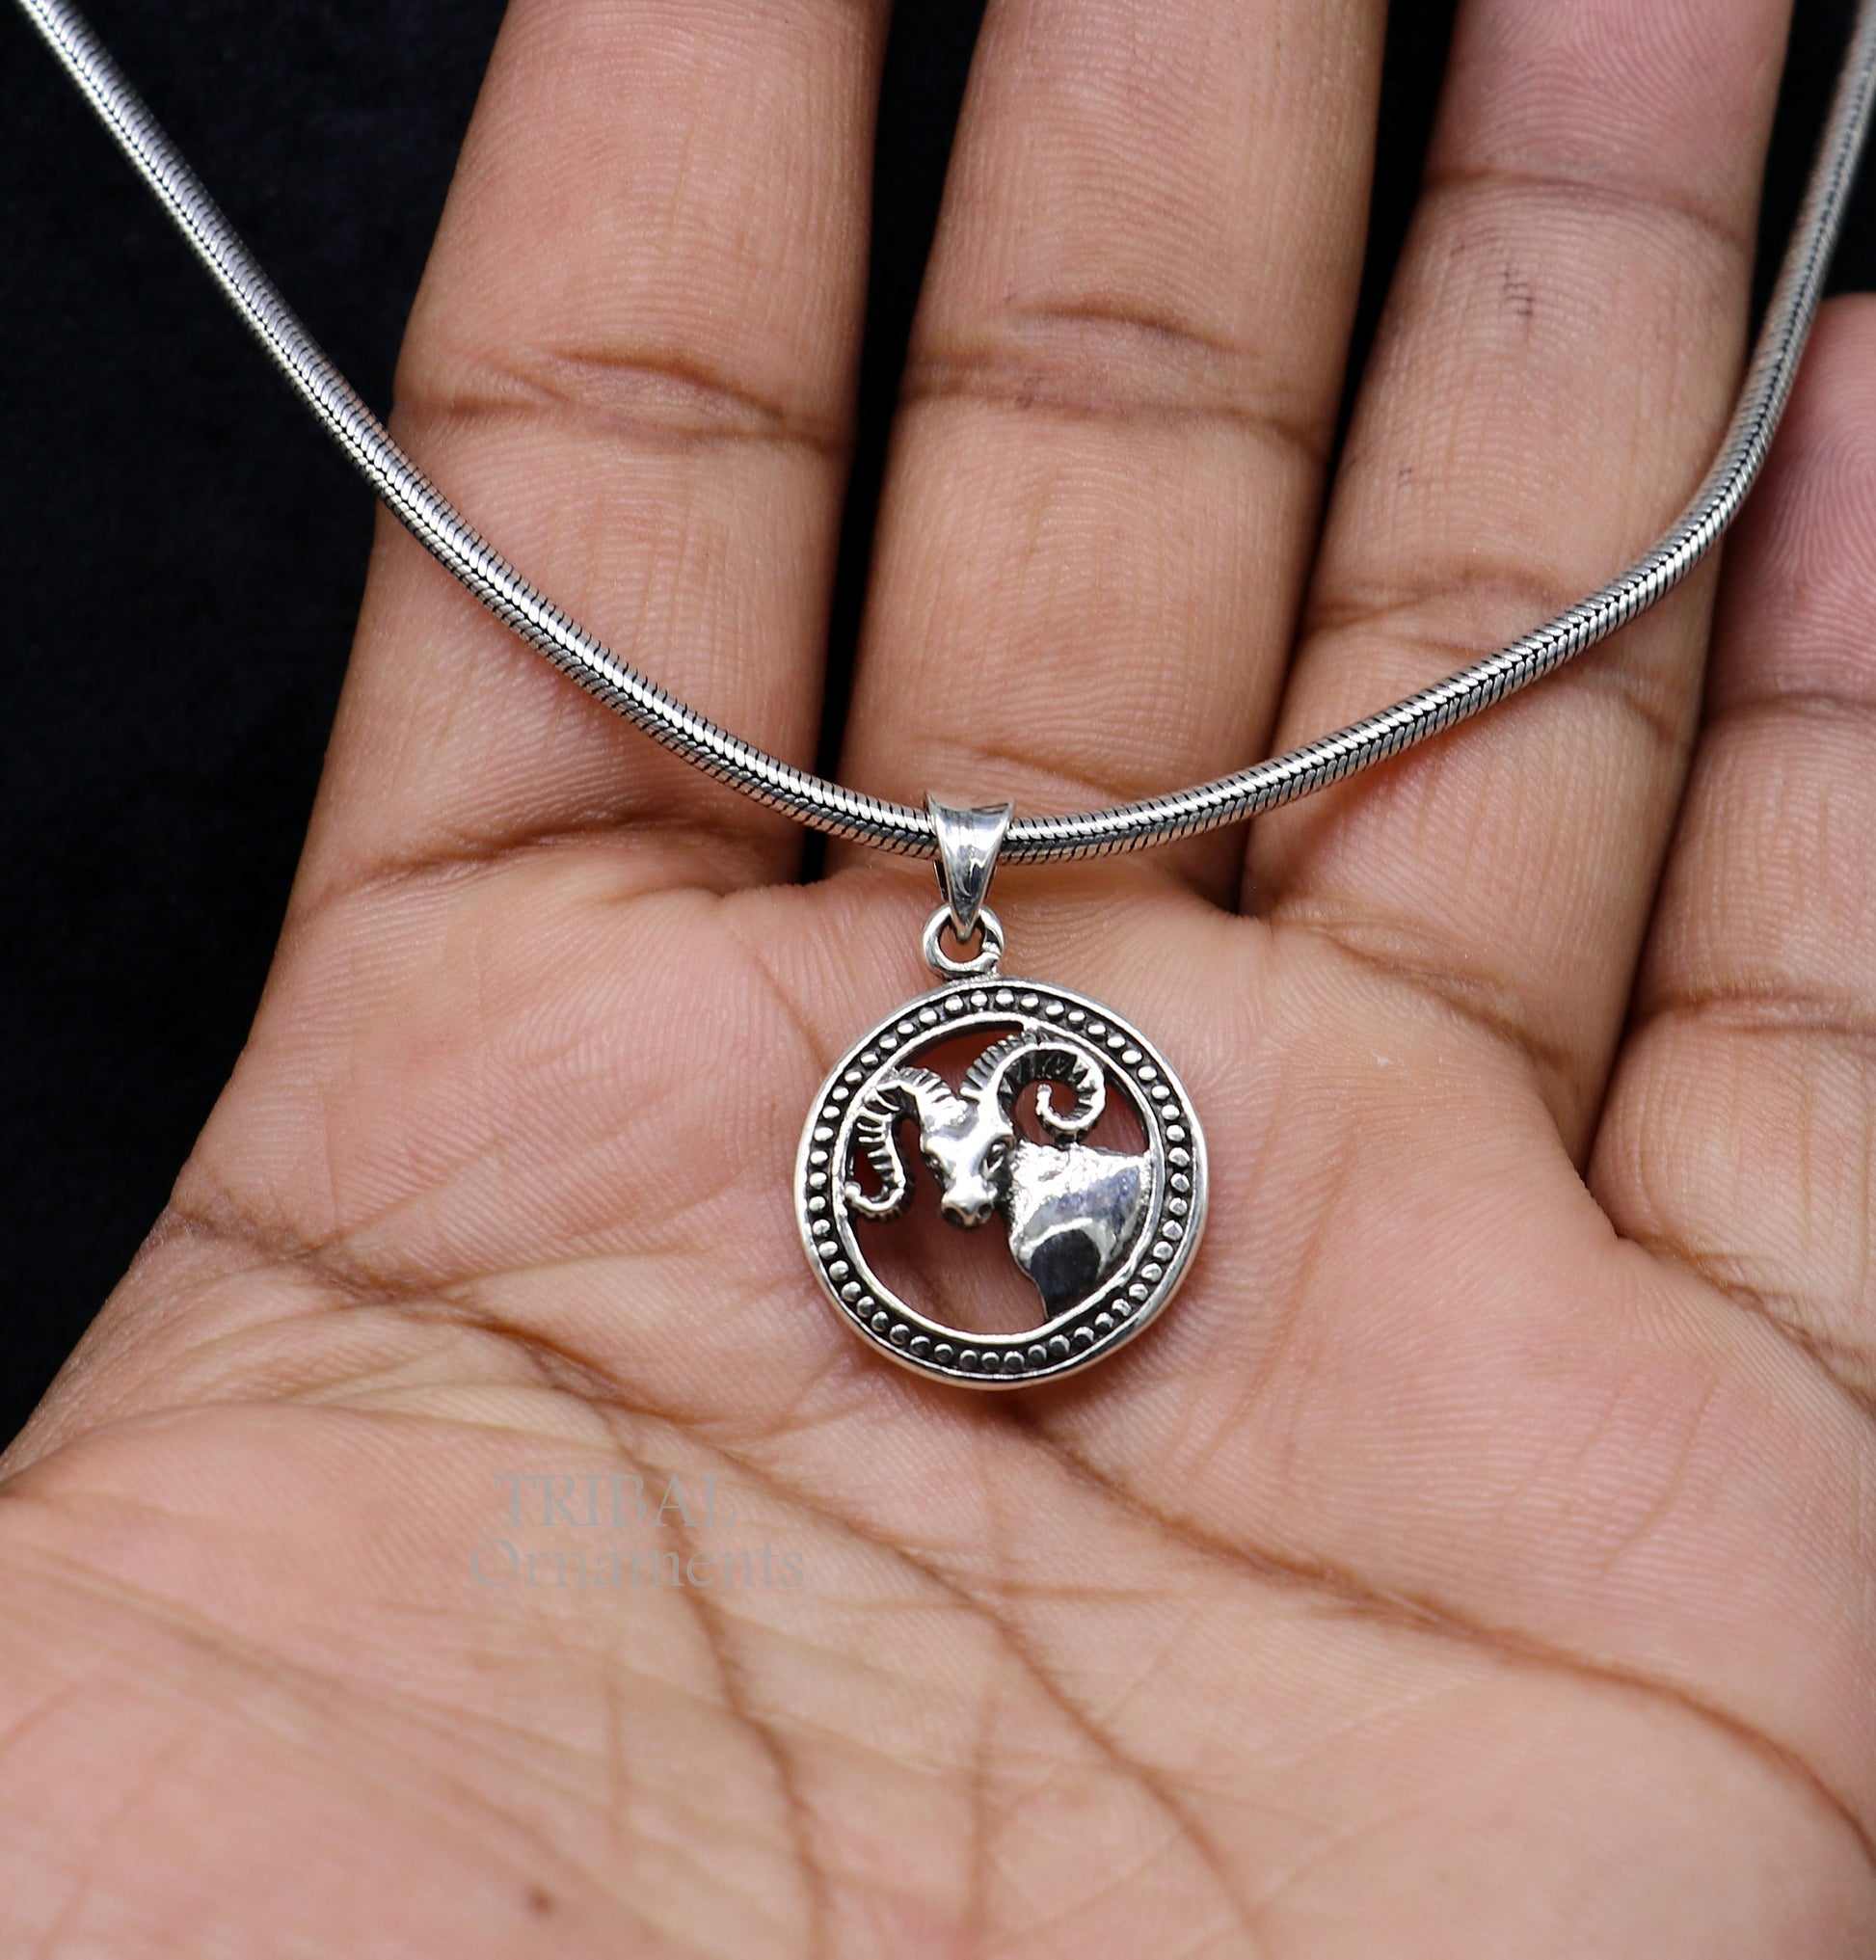 925 sterling silver unique Design horoscope zodiac Aries sign/symbol pendant unique Mesh Rashi symbol pendant best ethnic jewelry nsp574 - TRIBAL ORNAMENTS